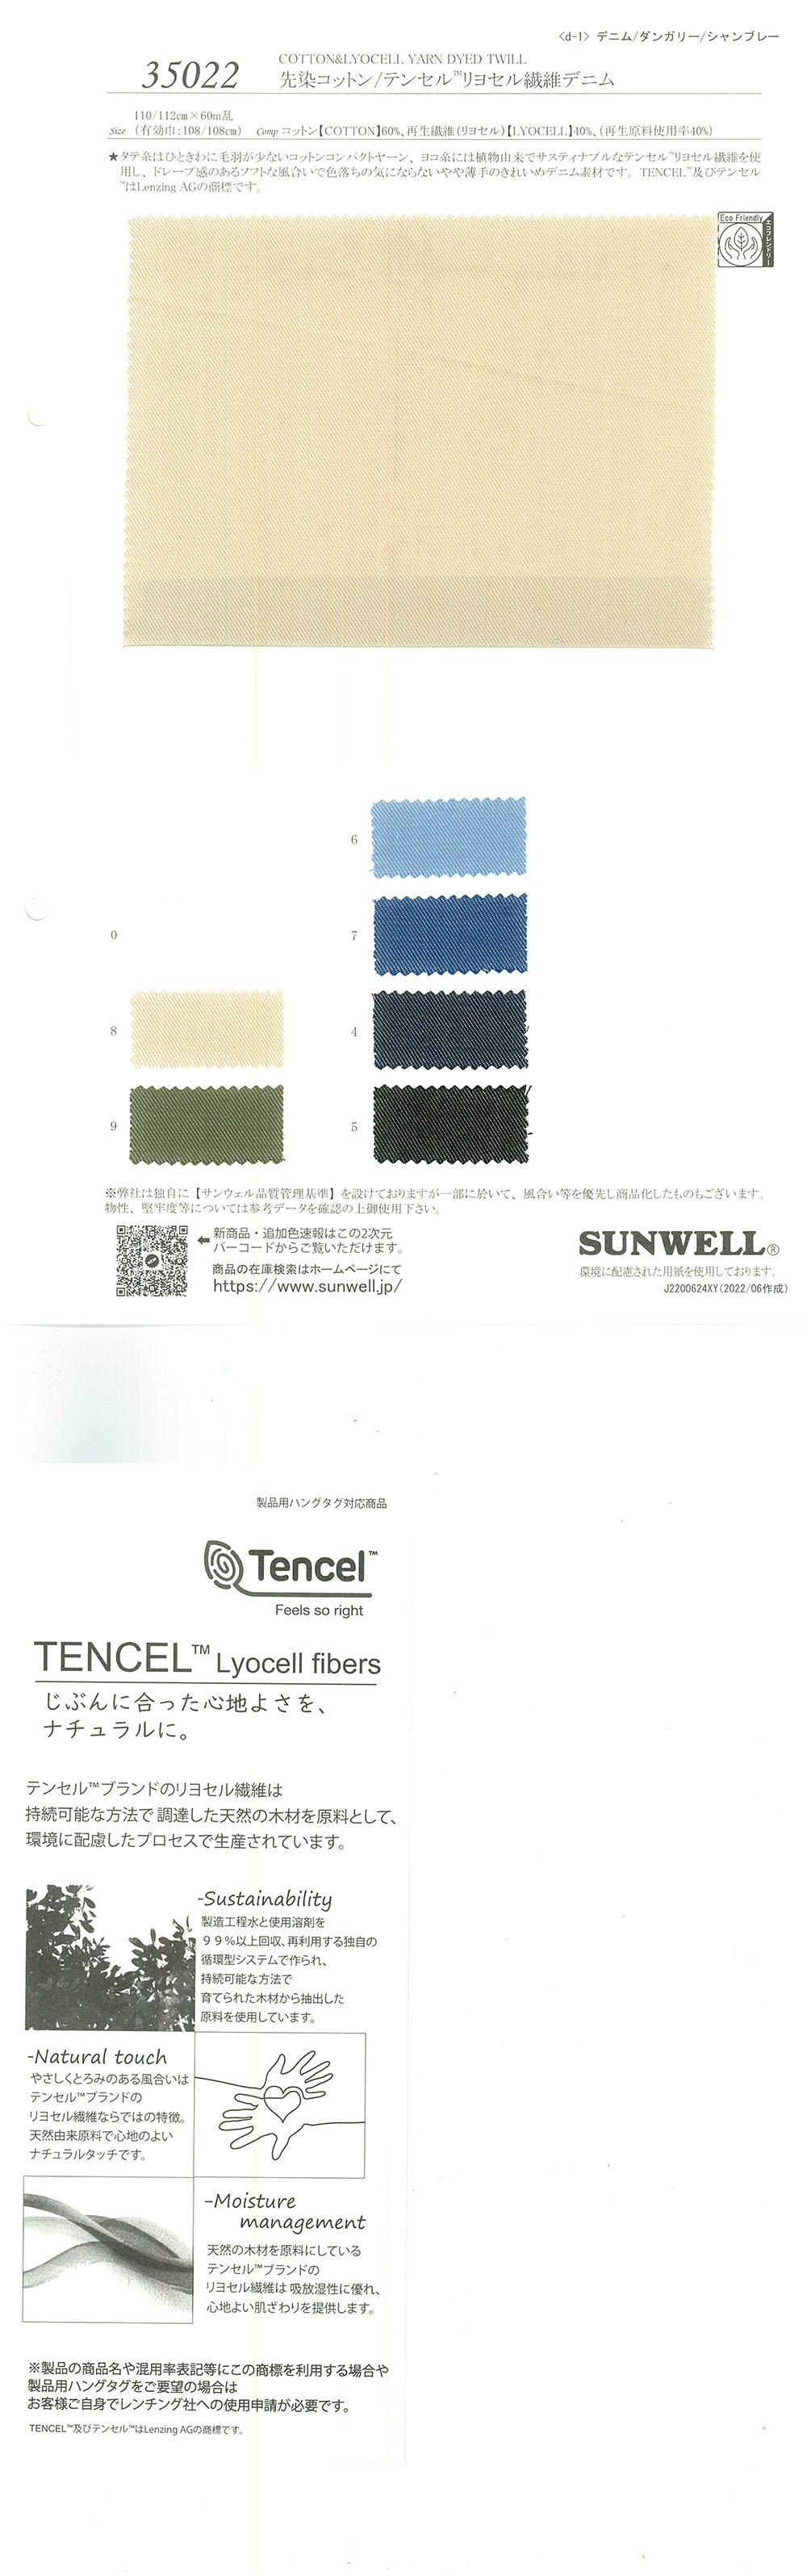 35022 Denim De Fibra De Lyocell De Algodón Teñido En Hilo / Tencel (TM)[Fabrica Textil] SUNWELL